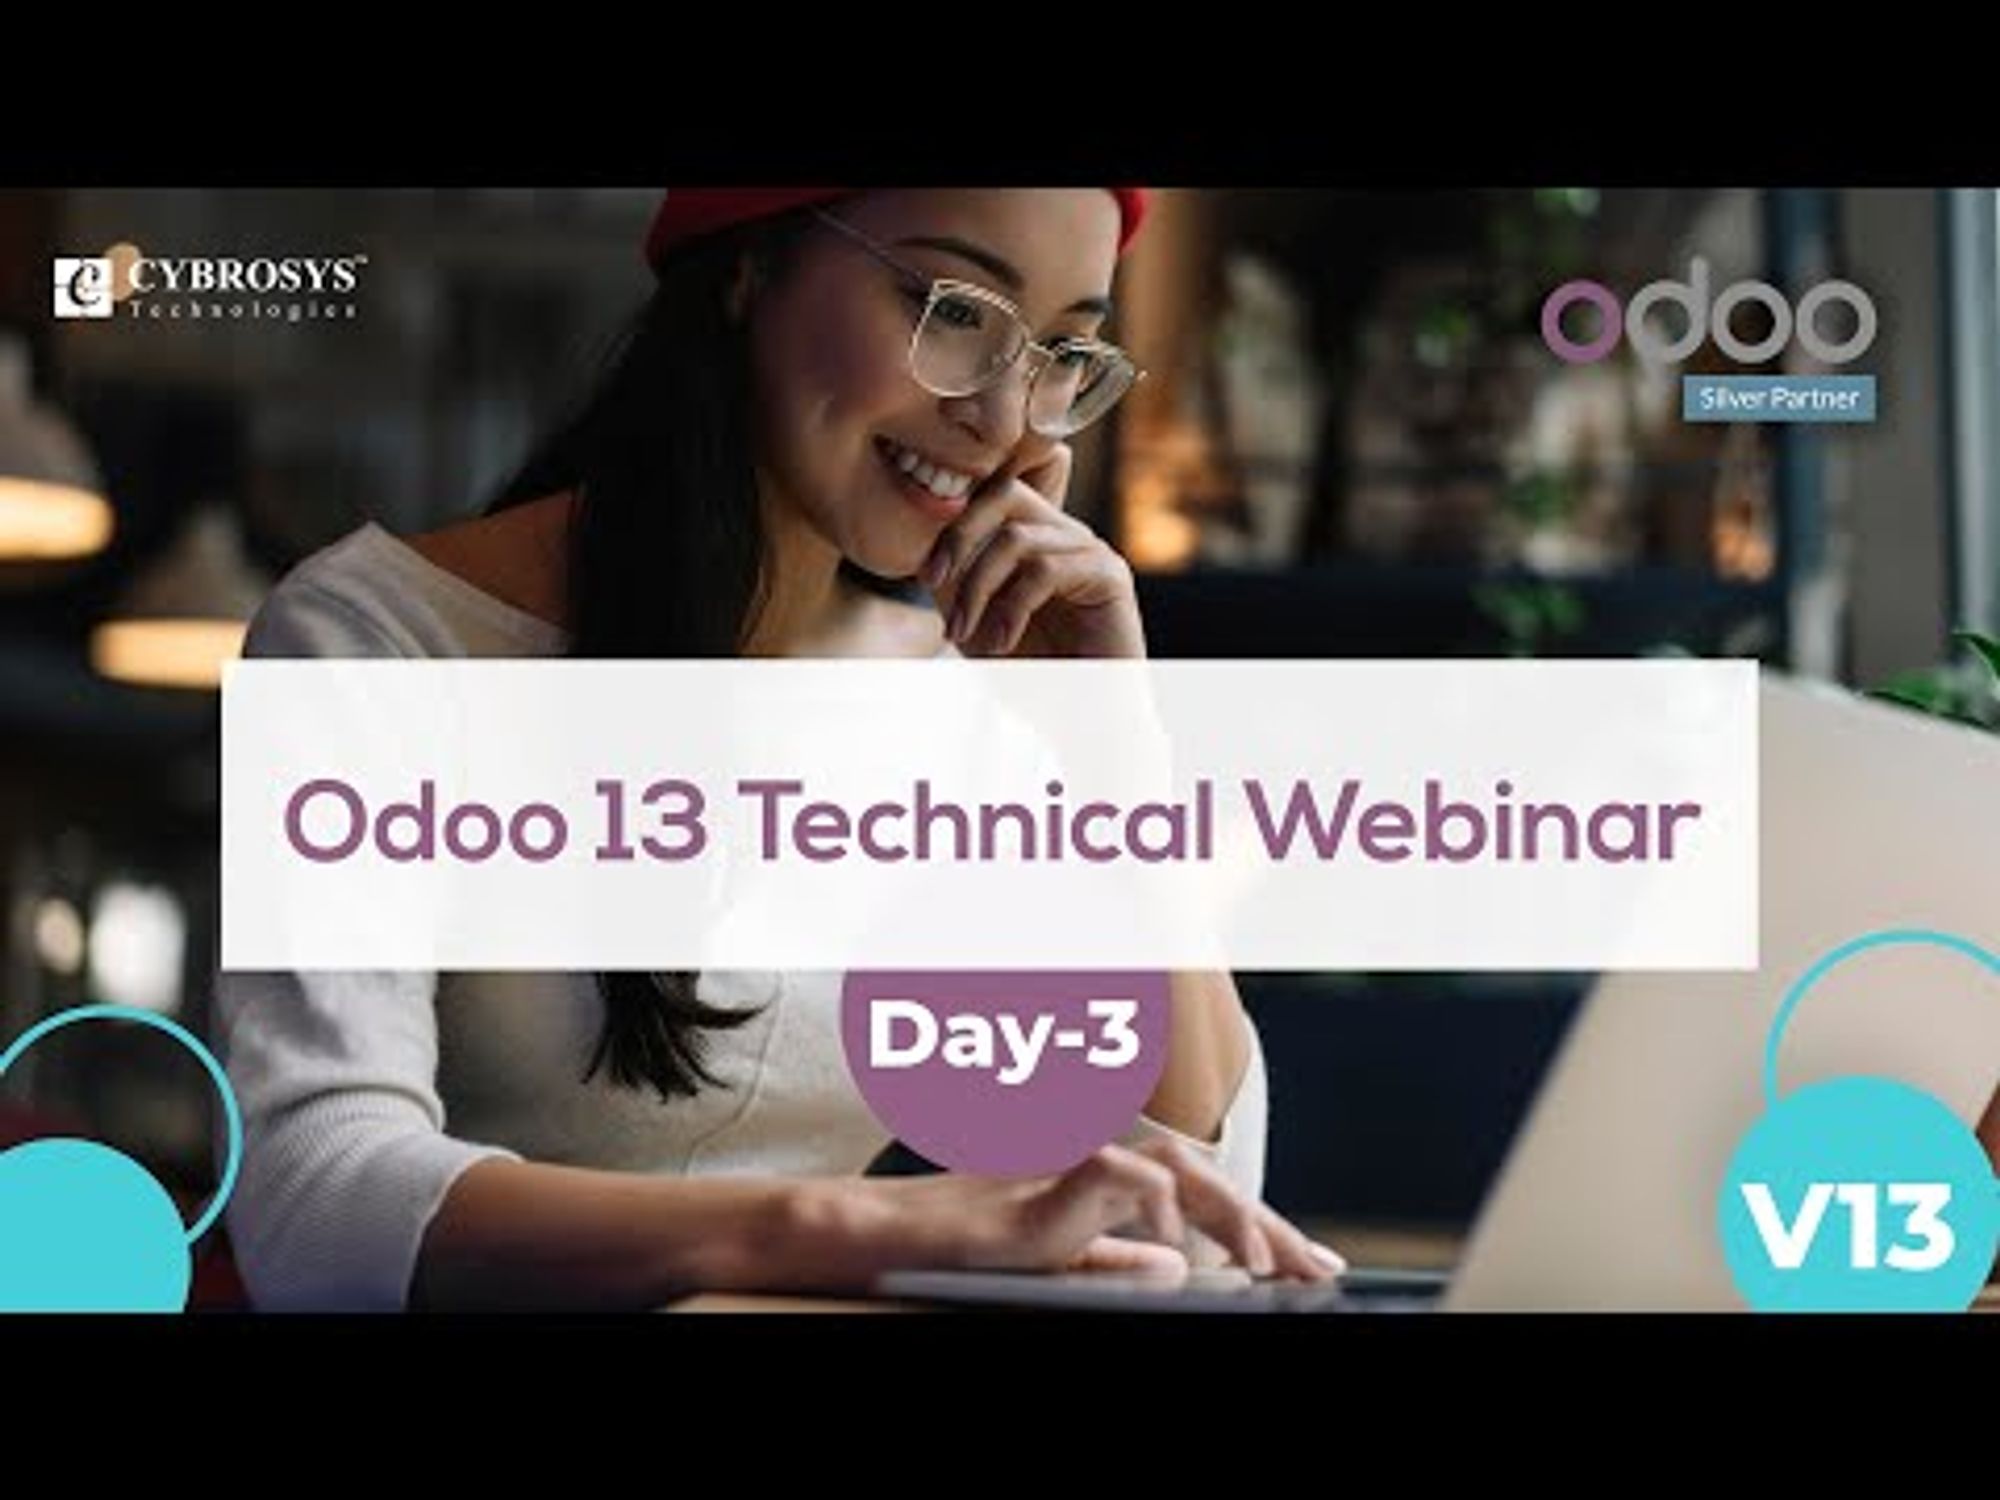 Odoo Webinar | Odoo Technical Training 2020 Day-3 | Cybrosys Technologies